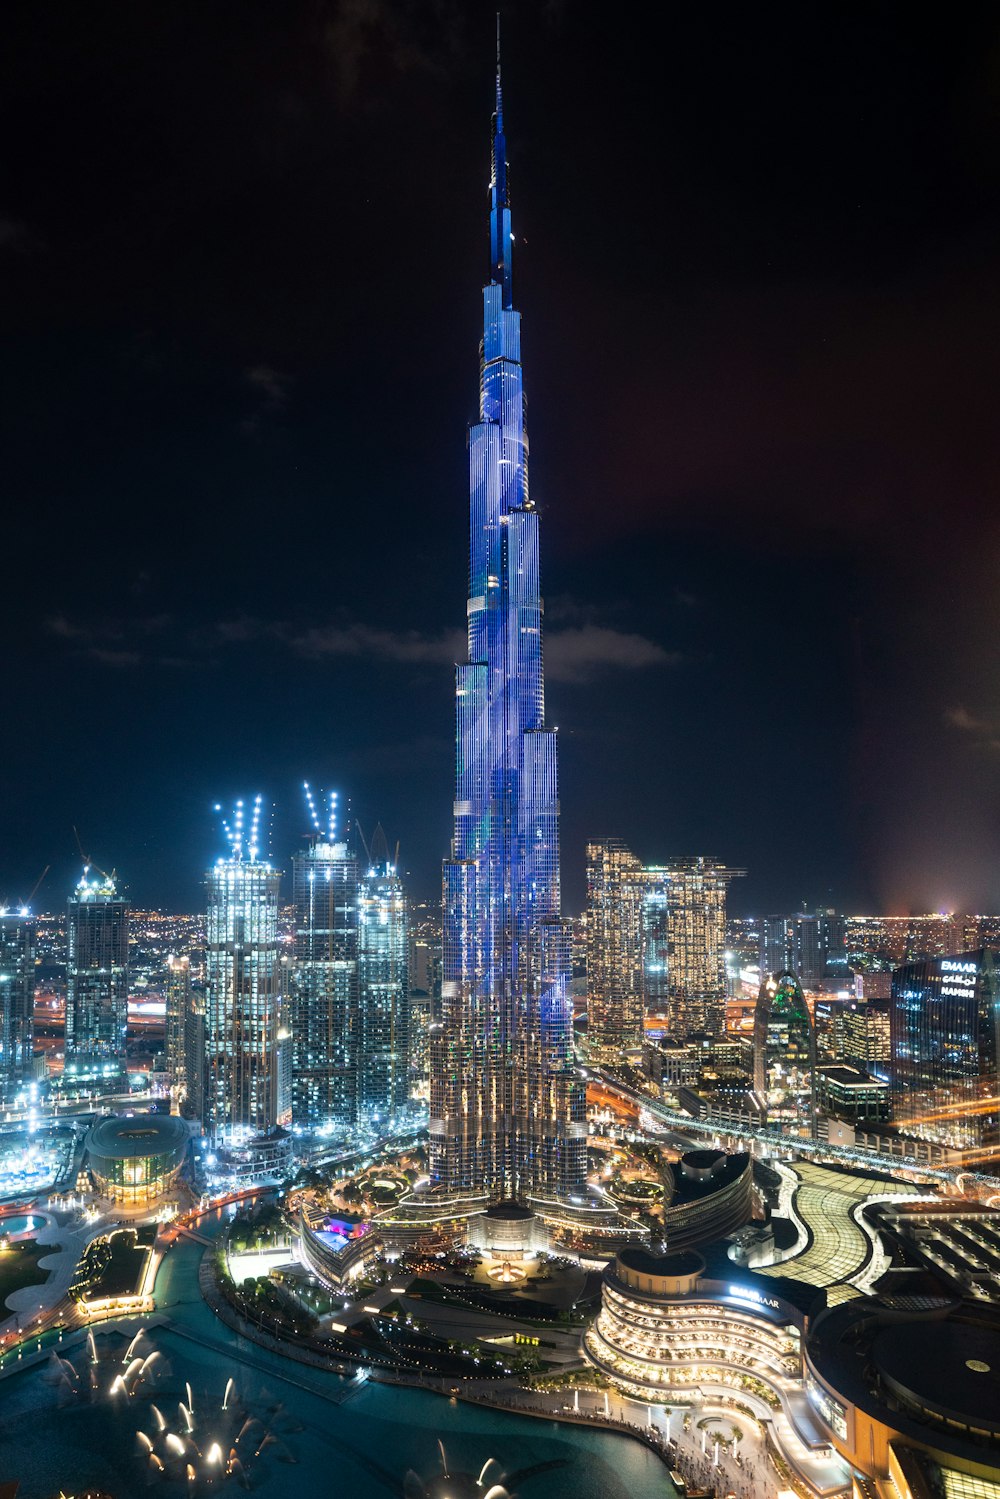 100+ Burj Khalifa Pictures | Download Free Images on Unsplash